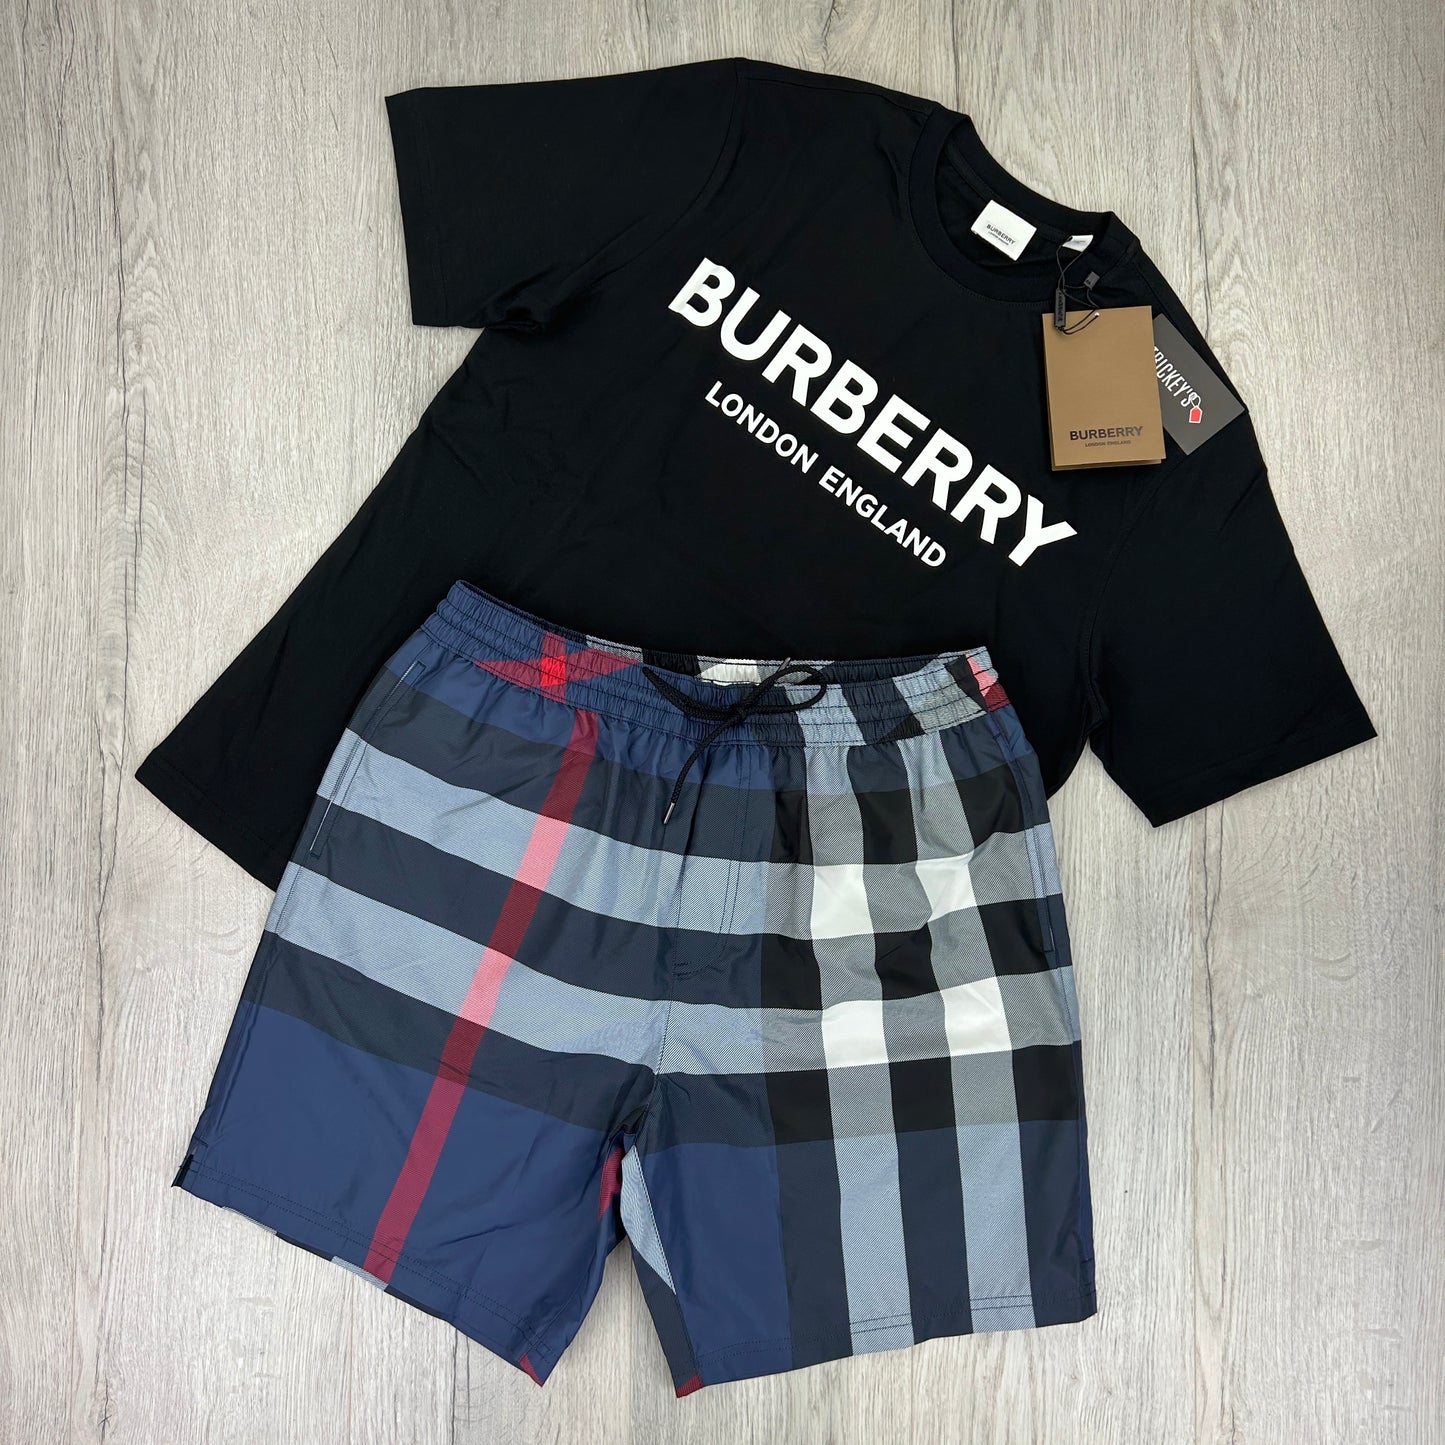 Burberry Men’s Black T-shirt & Navy Swim Short Set